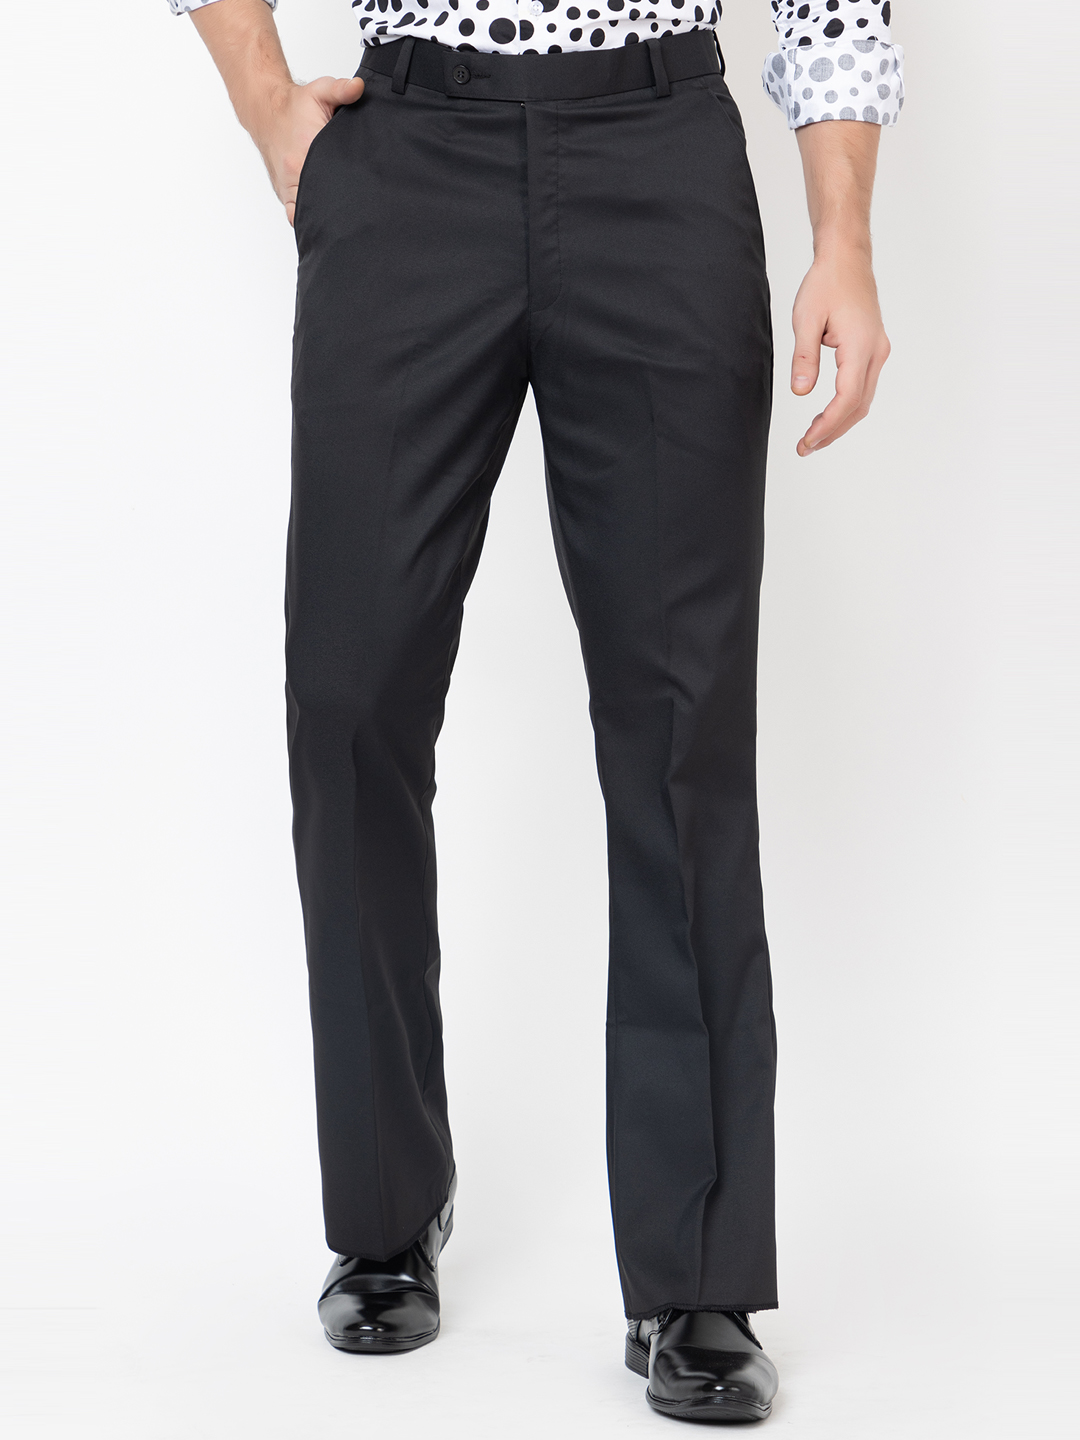 Men's Gurkha Pants Suit Casual Business Trousers Formal Loose High Waist  Solid | eBay